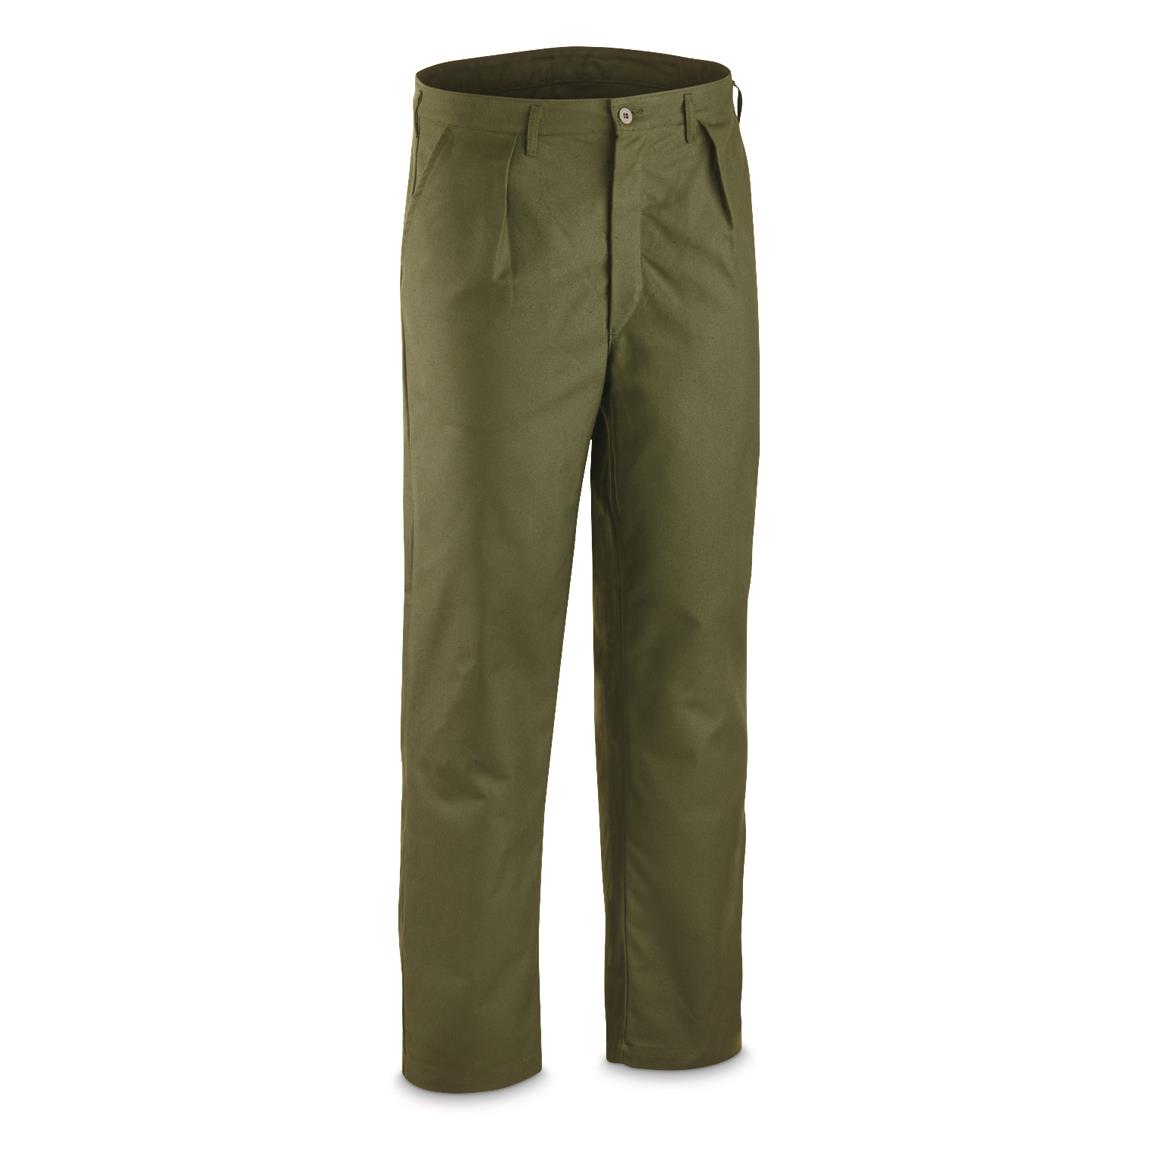 Swedish Military Surplus Field Pants, New, Olive Drab